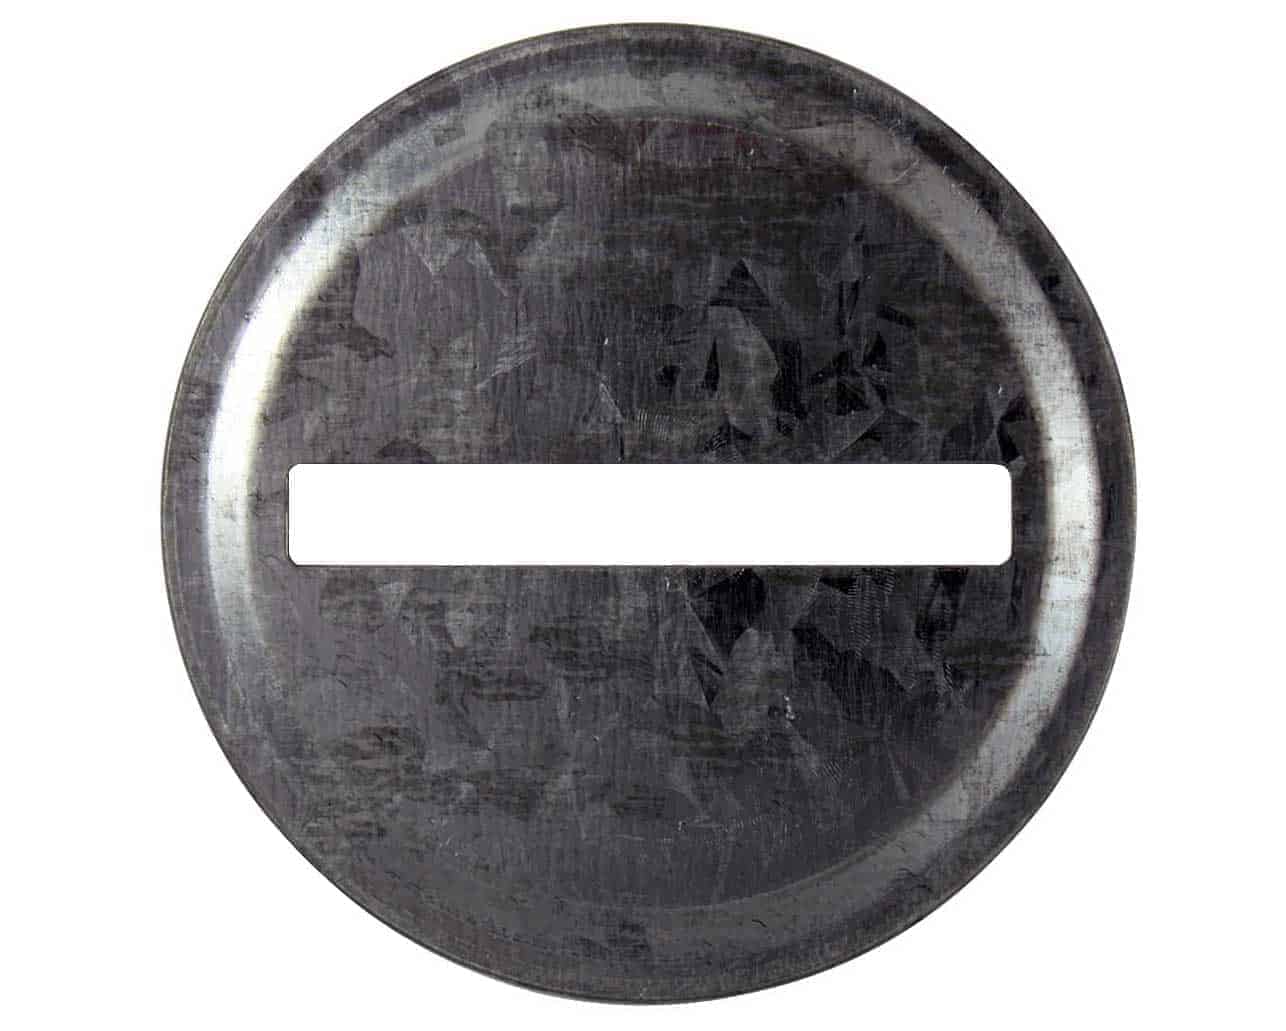 Coin Slot Bank Galvanized Metal Lid Insert for Mason Jars 10 Pack